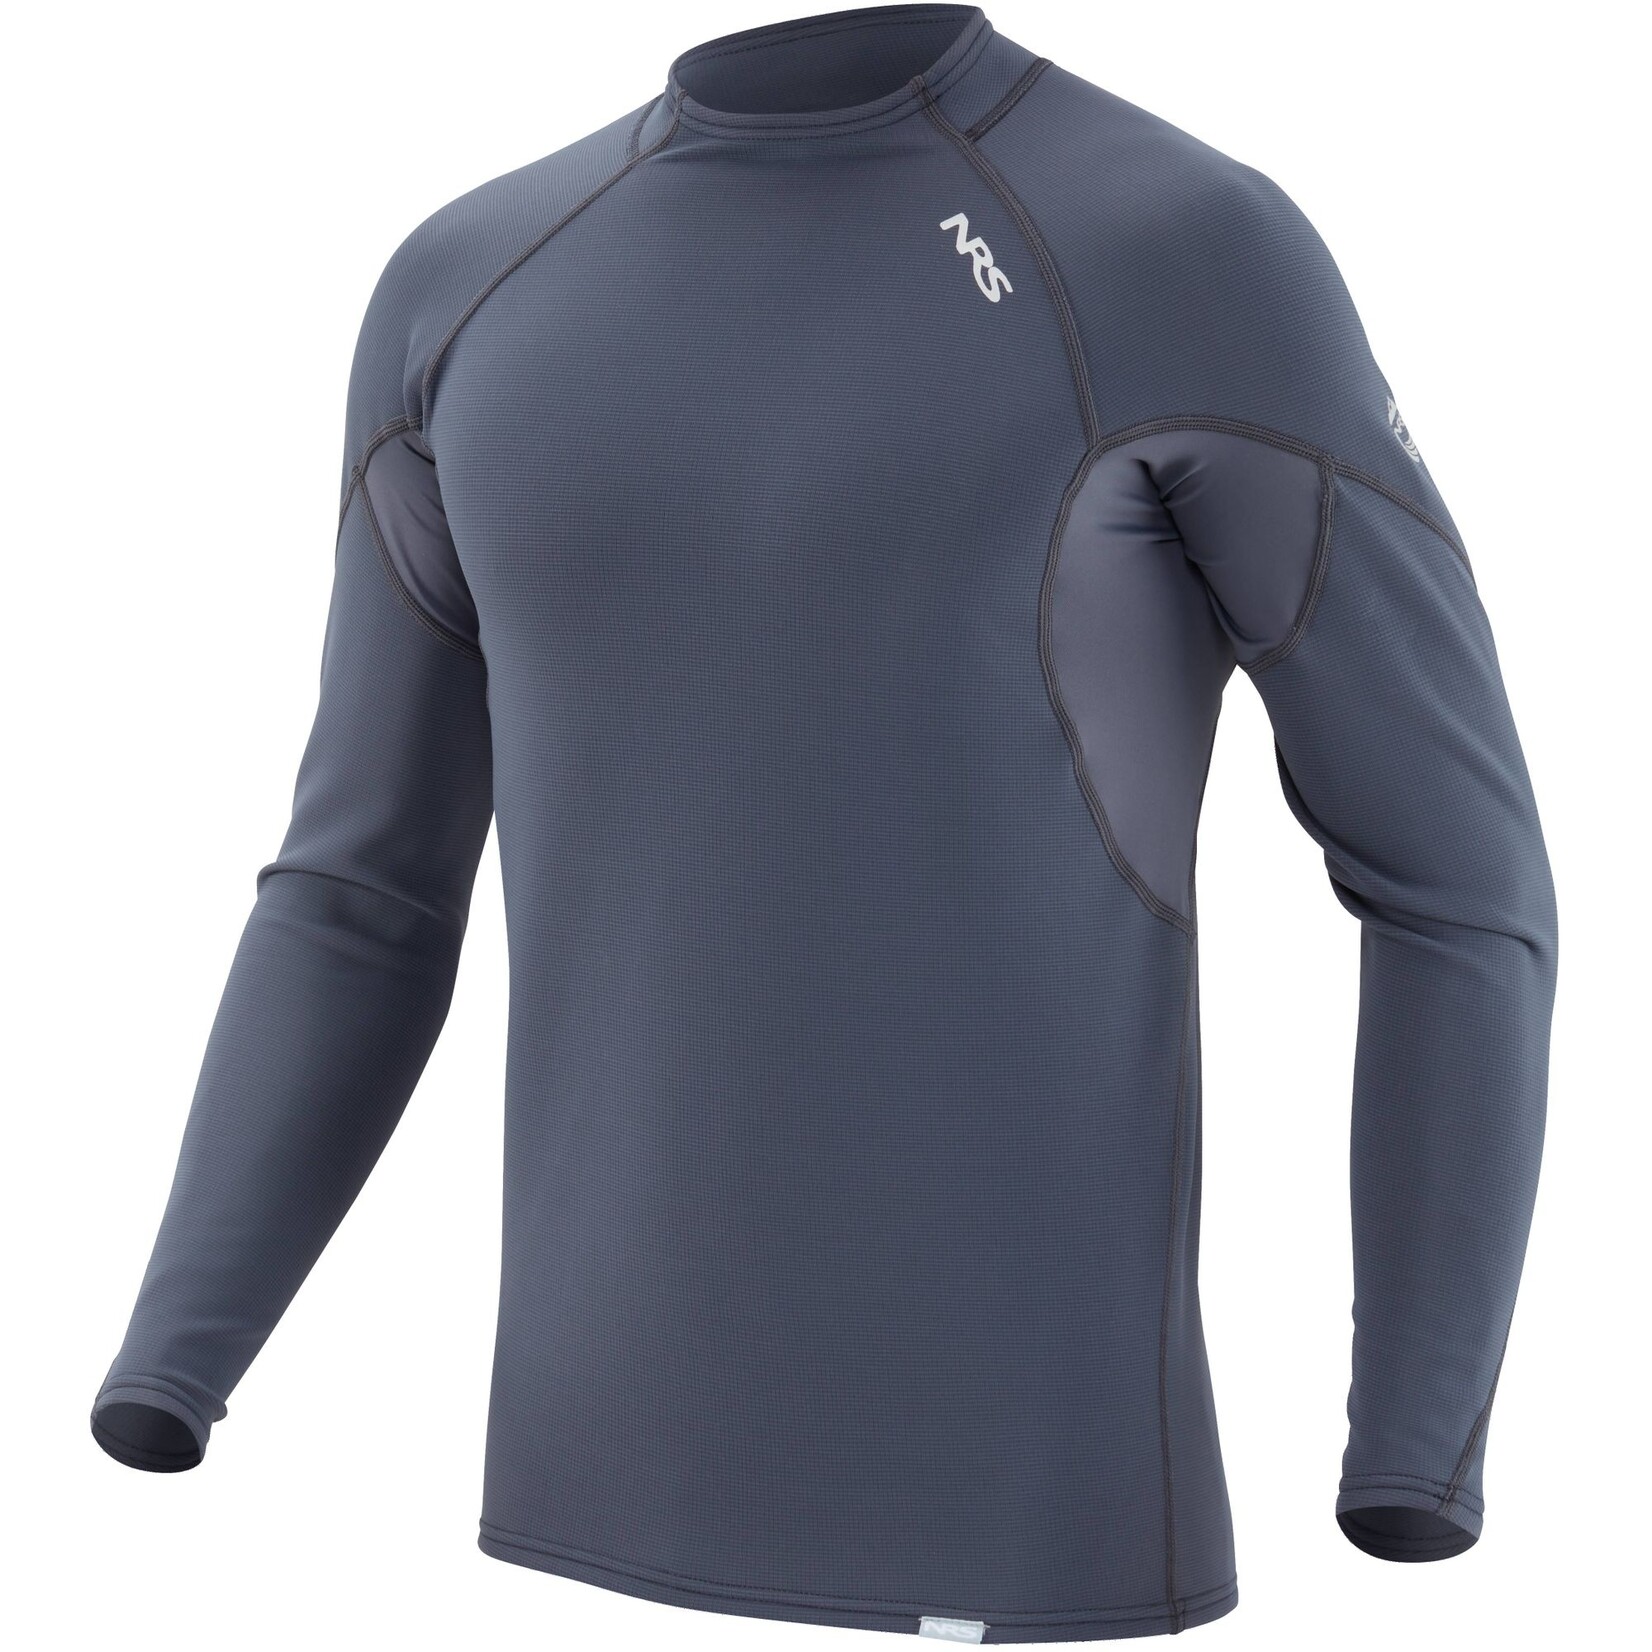 NRS - Men's HydroSkin 0.5 Long-Sleeve Shirt